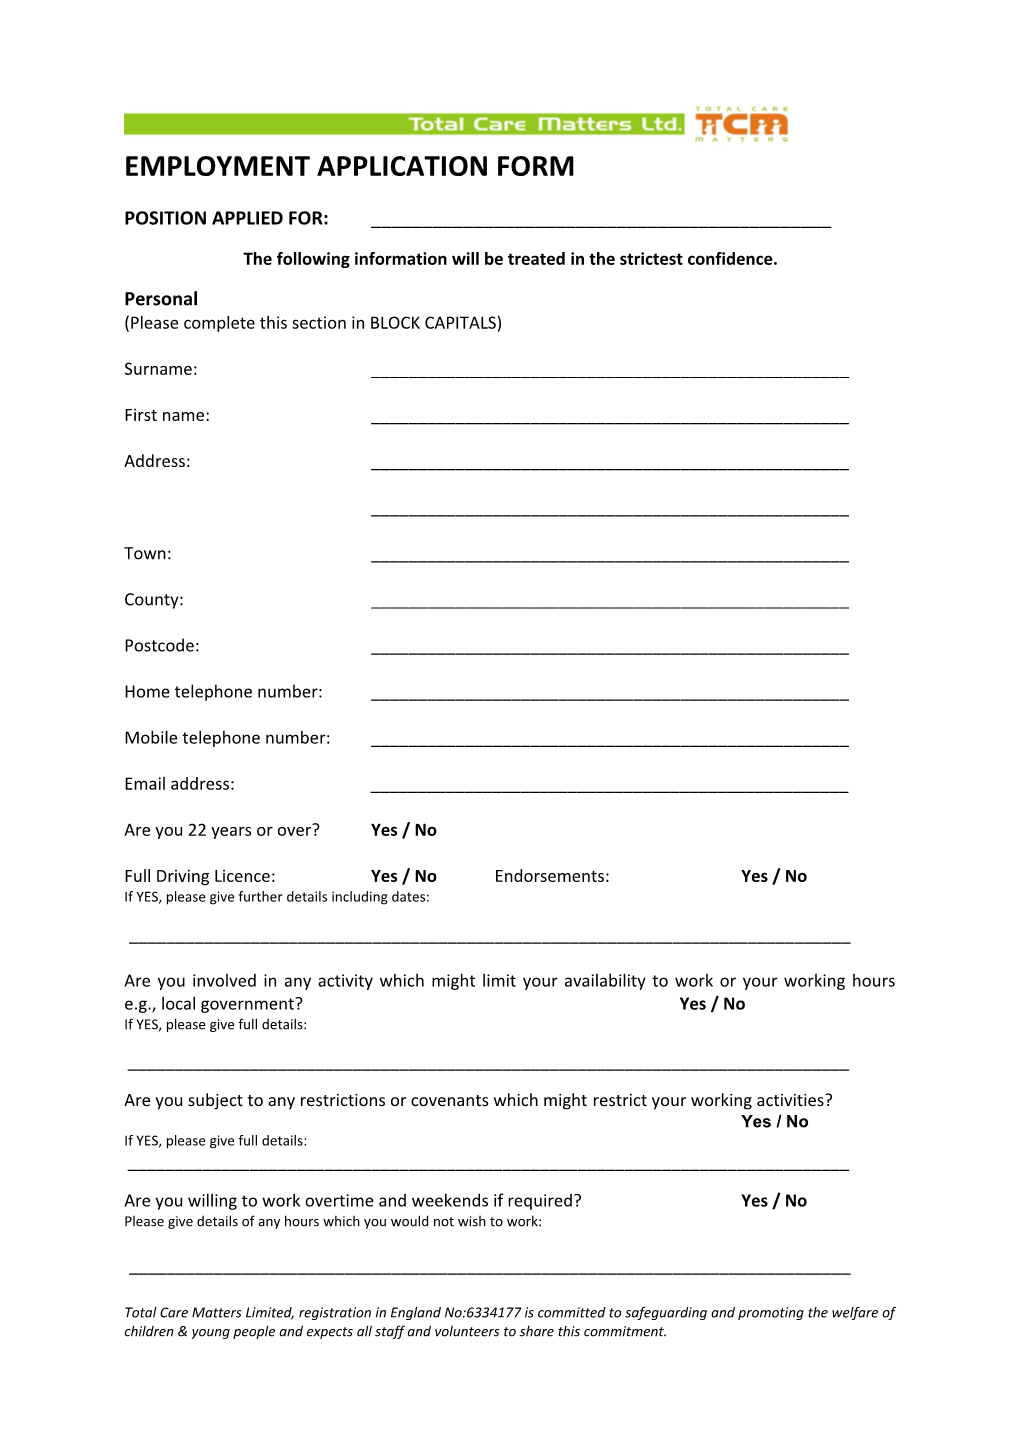 Employment Application Form s11